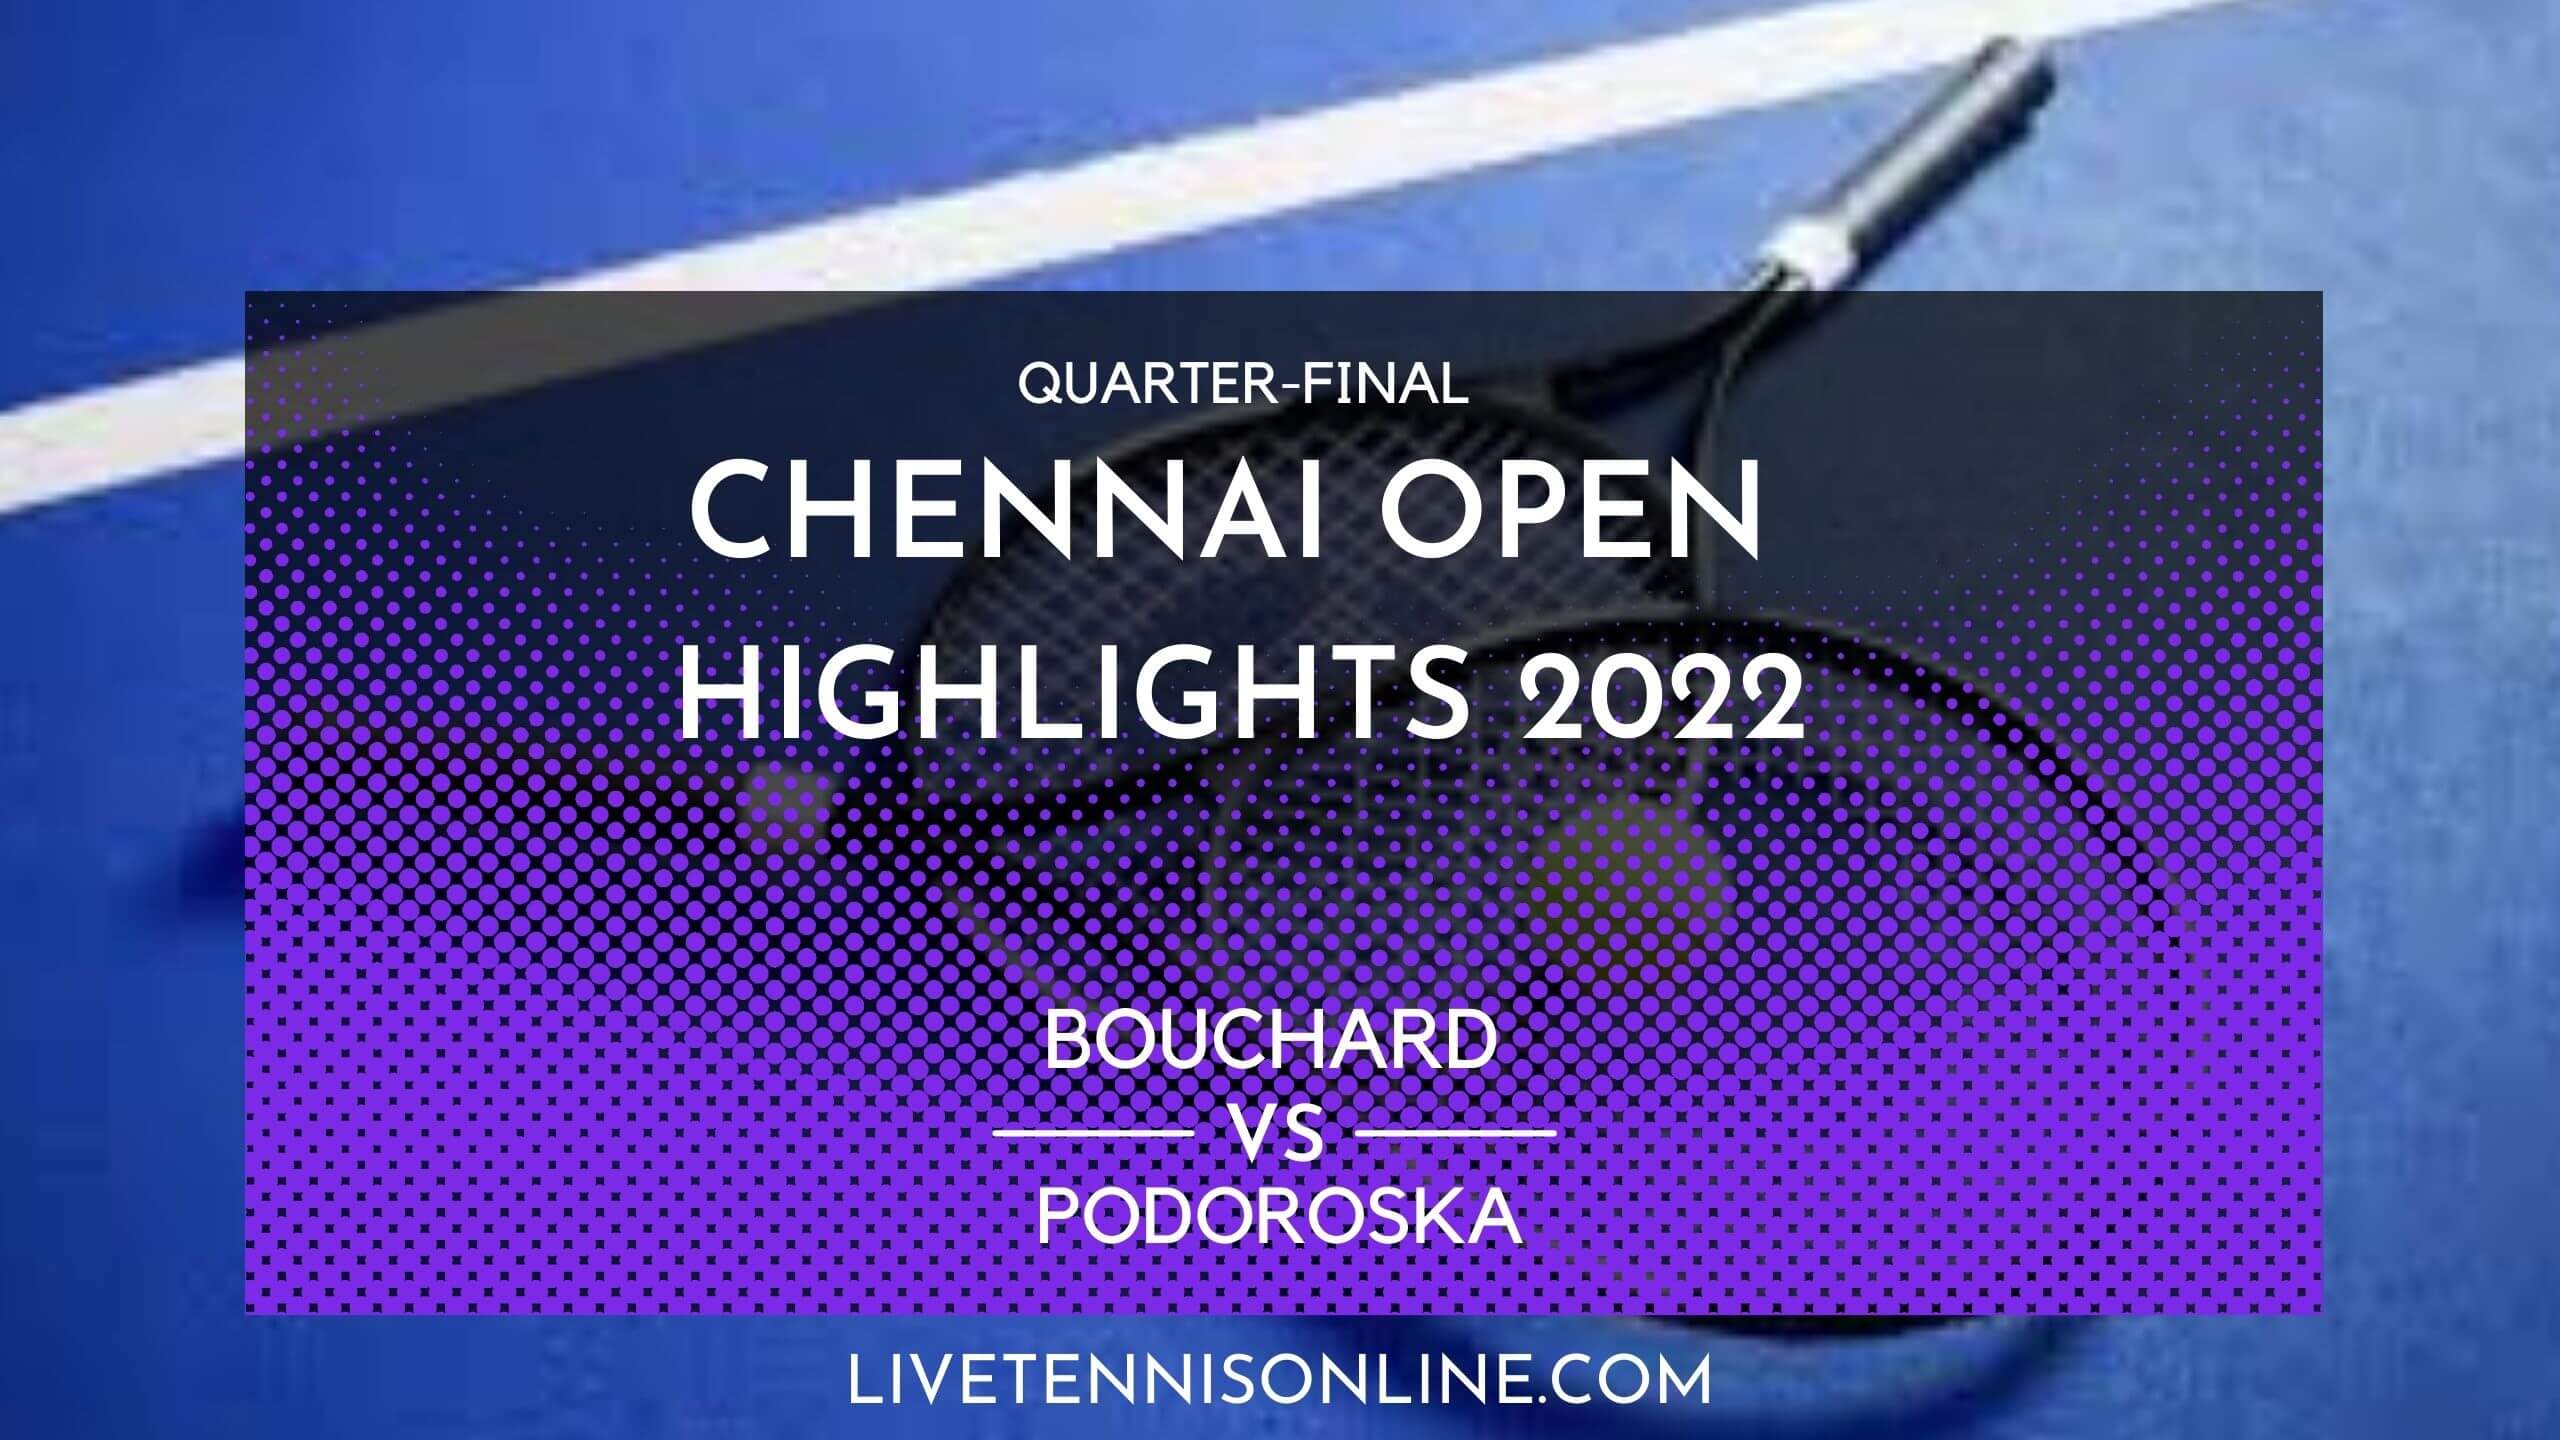 Bouchard Vs Podoroska QF Highlights 2022 Chennai Open